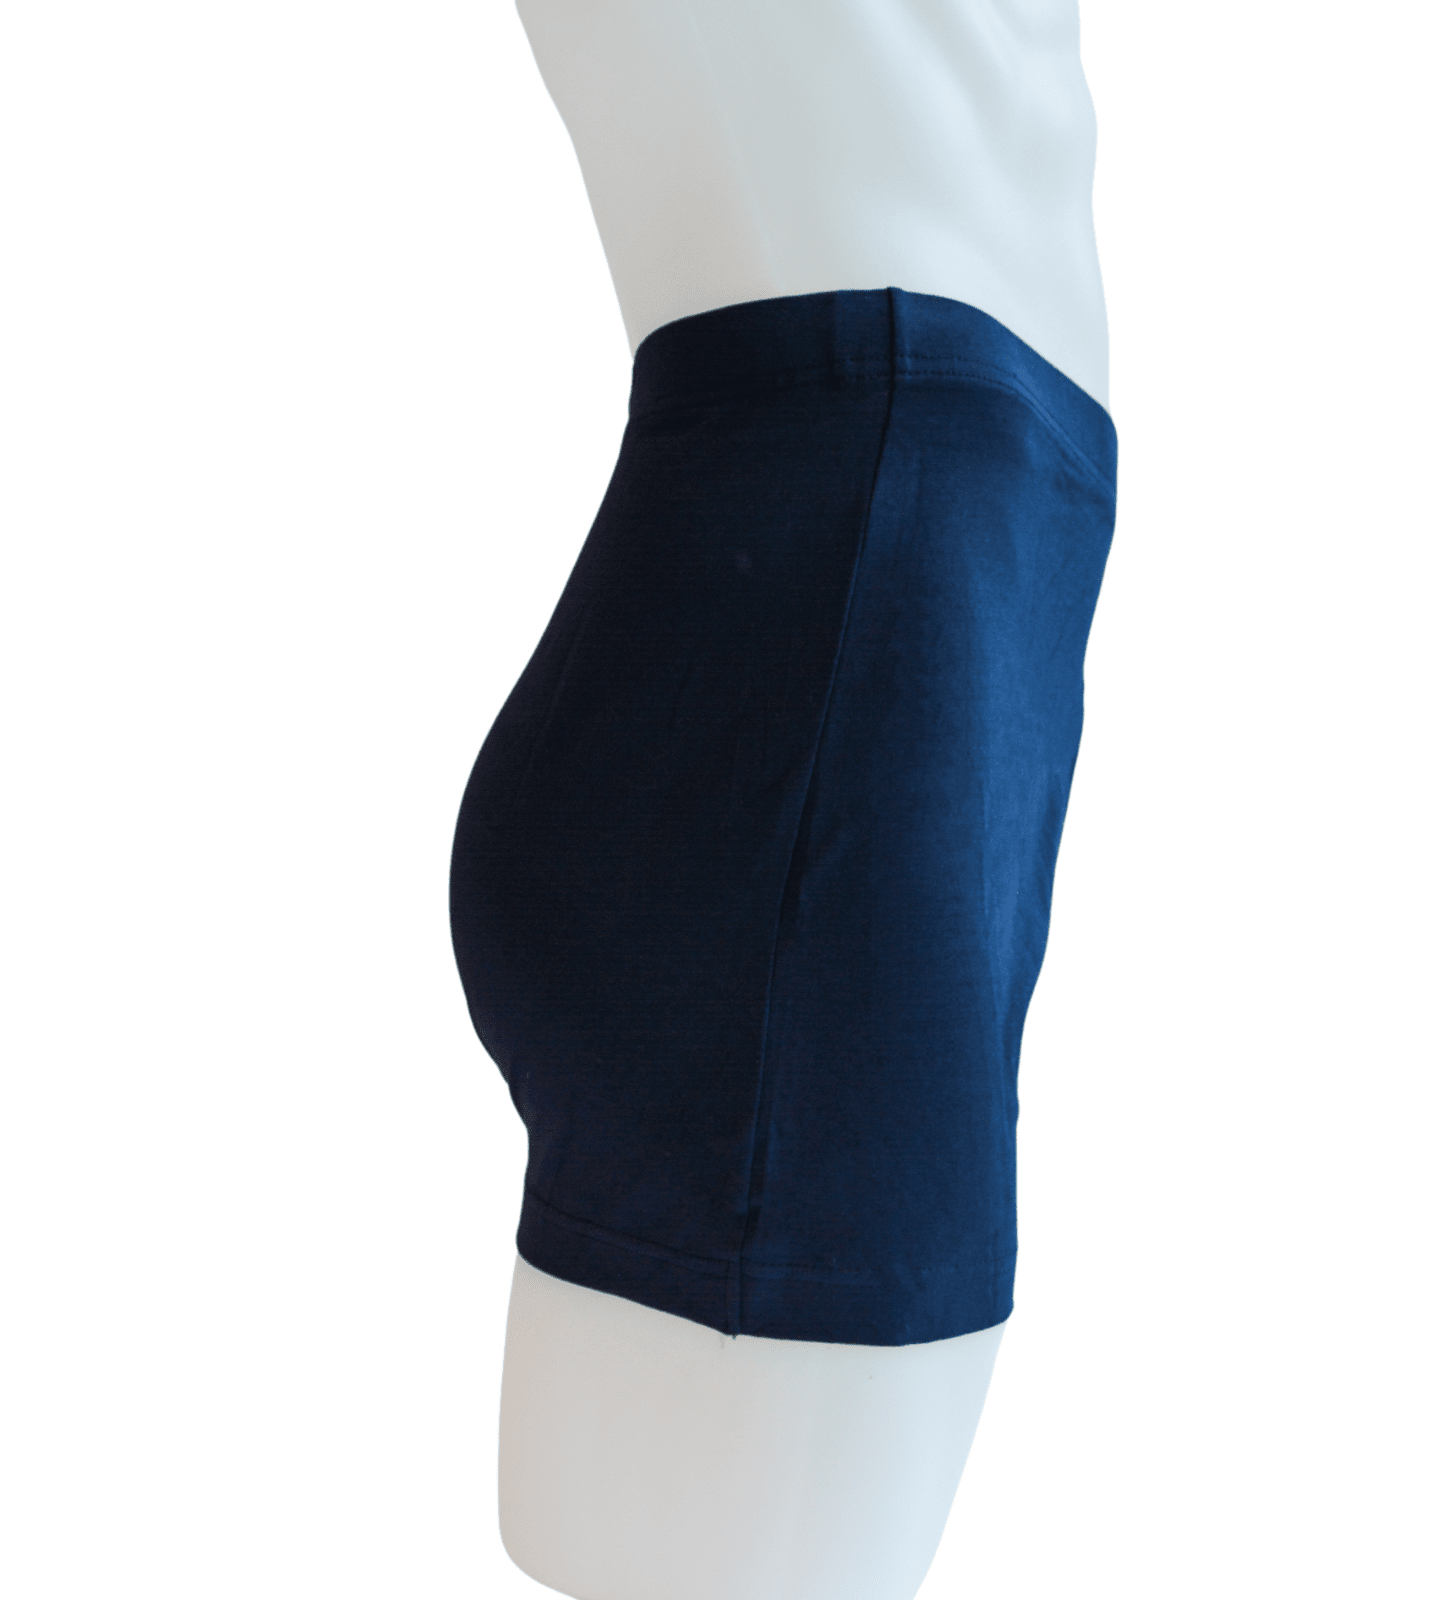 Men's Absorbent Cotton Underwear - Brolly Sheets AU